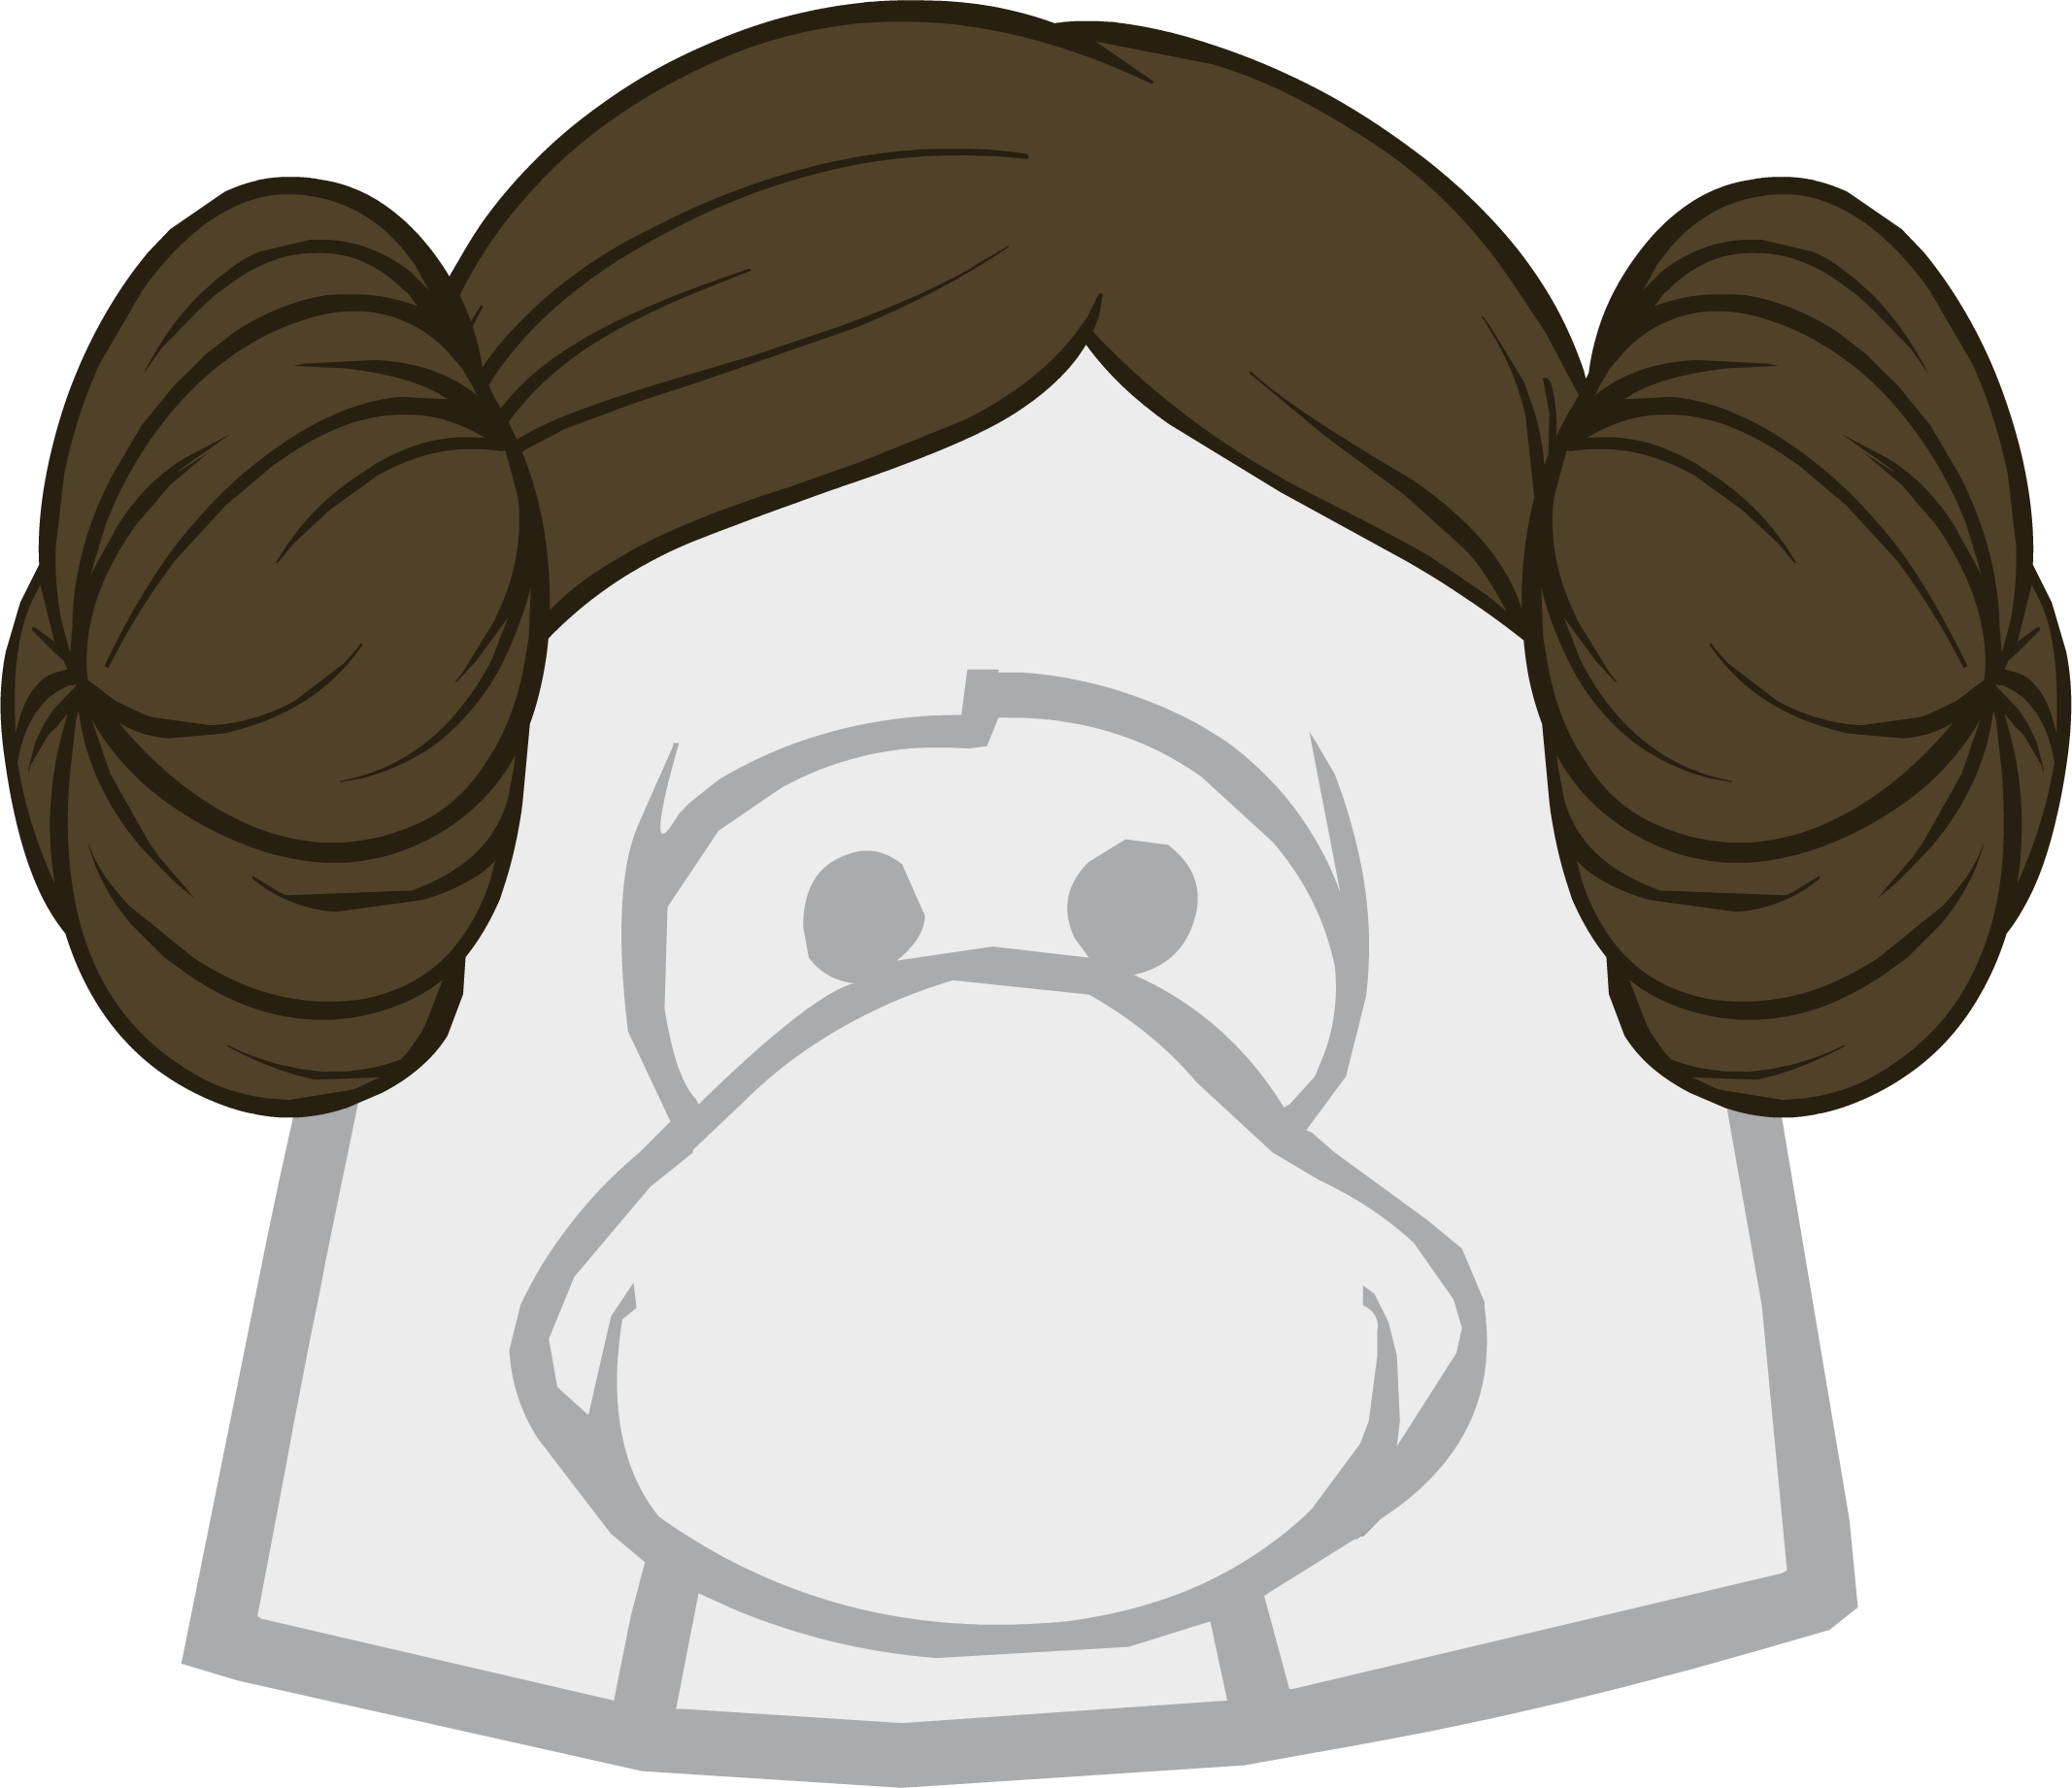 Download The Princess Leia Club Penguin Wiki Fandom